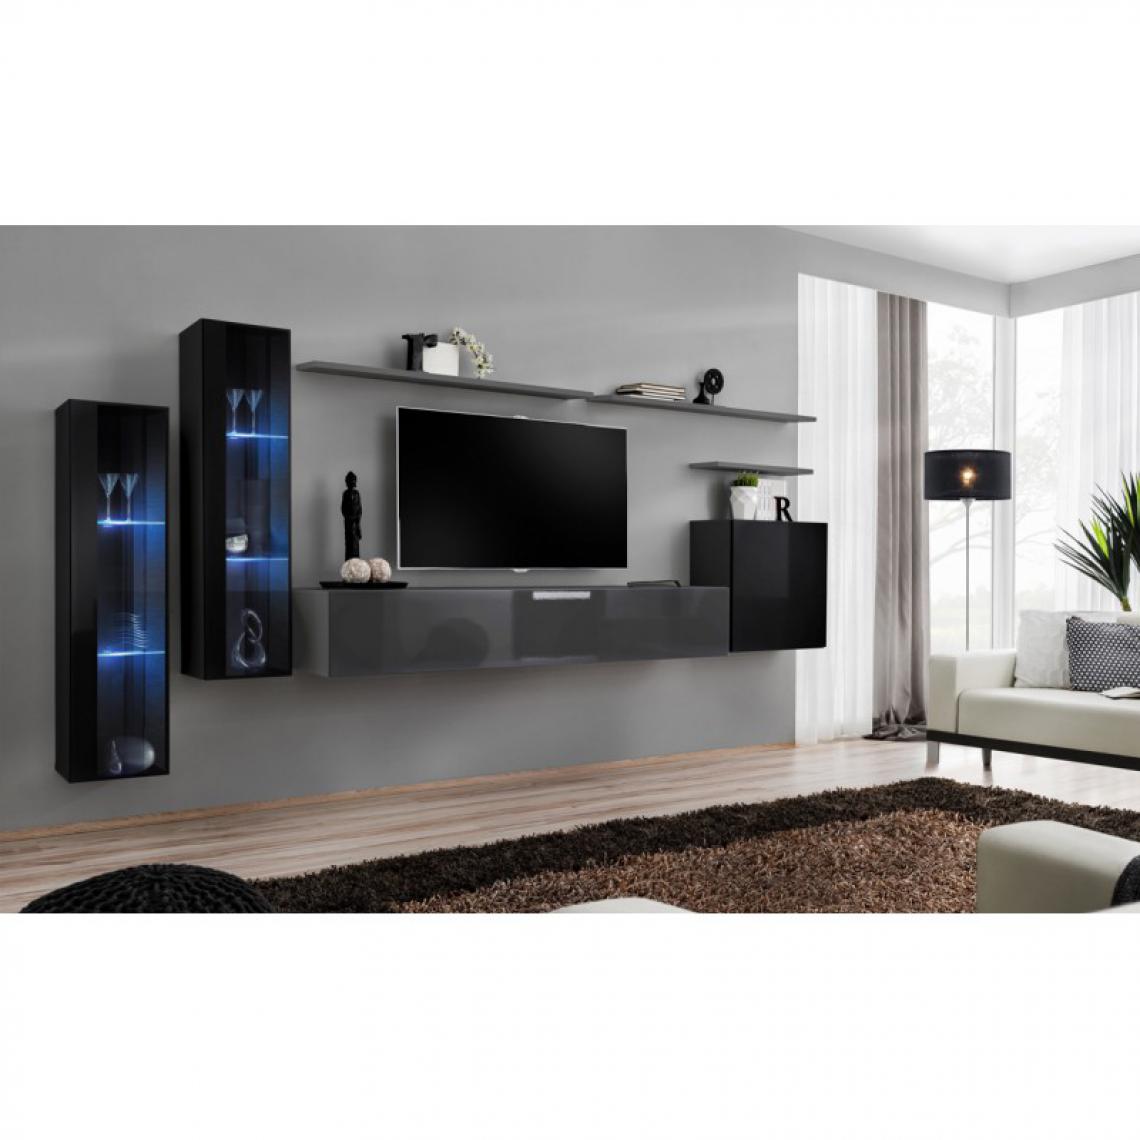 Ac-Deco - Meuble TV Mural Design Switch XI 330cm Noir & Gris - Meubles TV, Hi-Fi